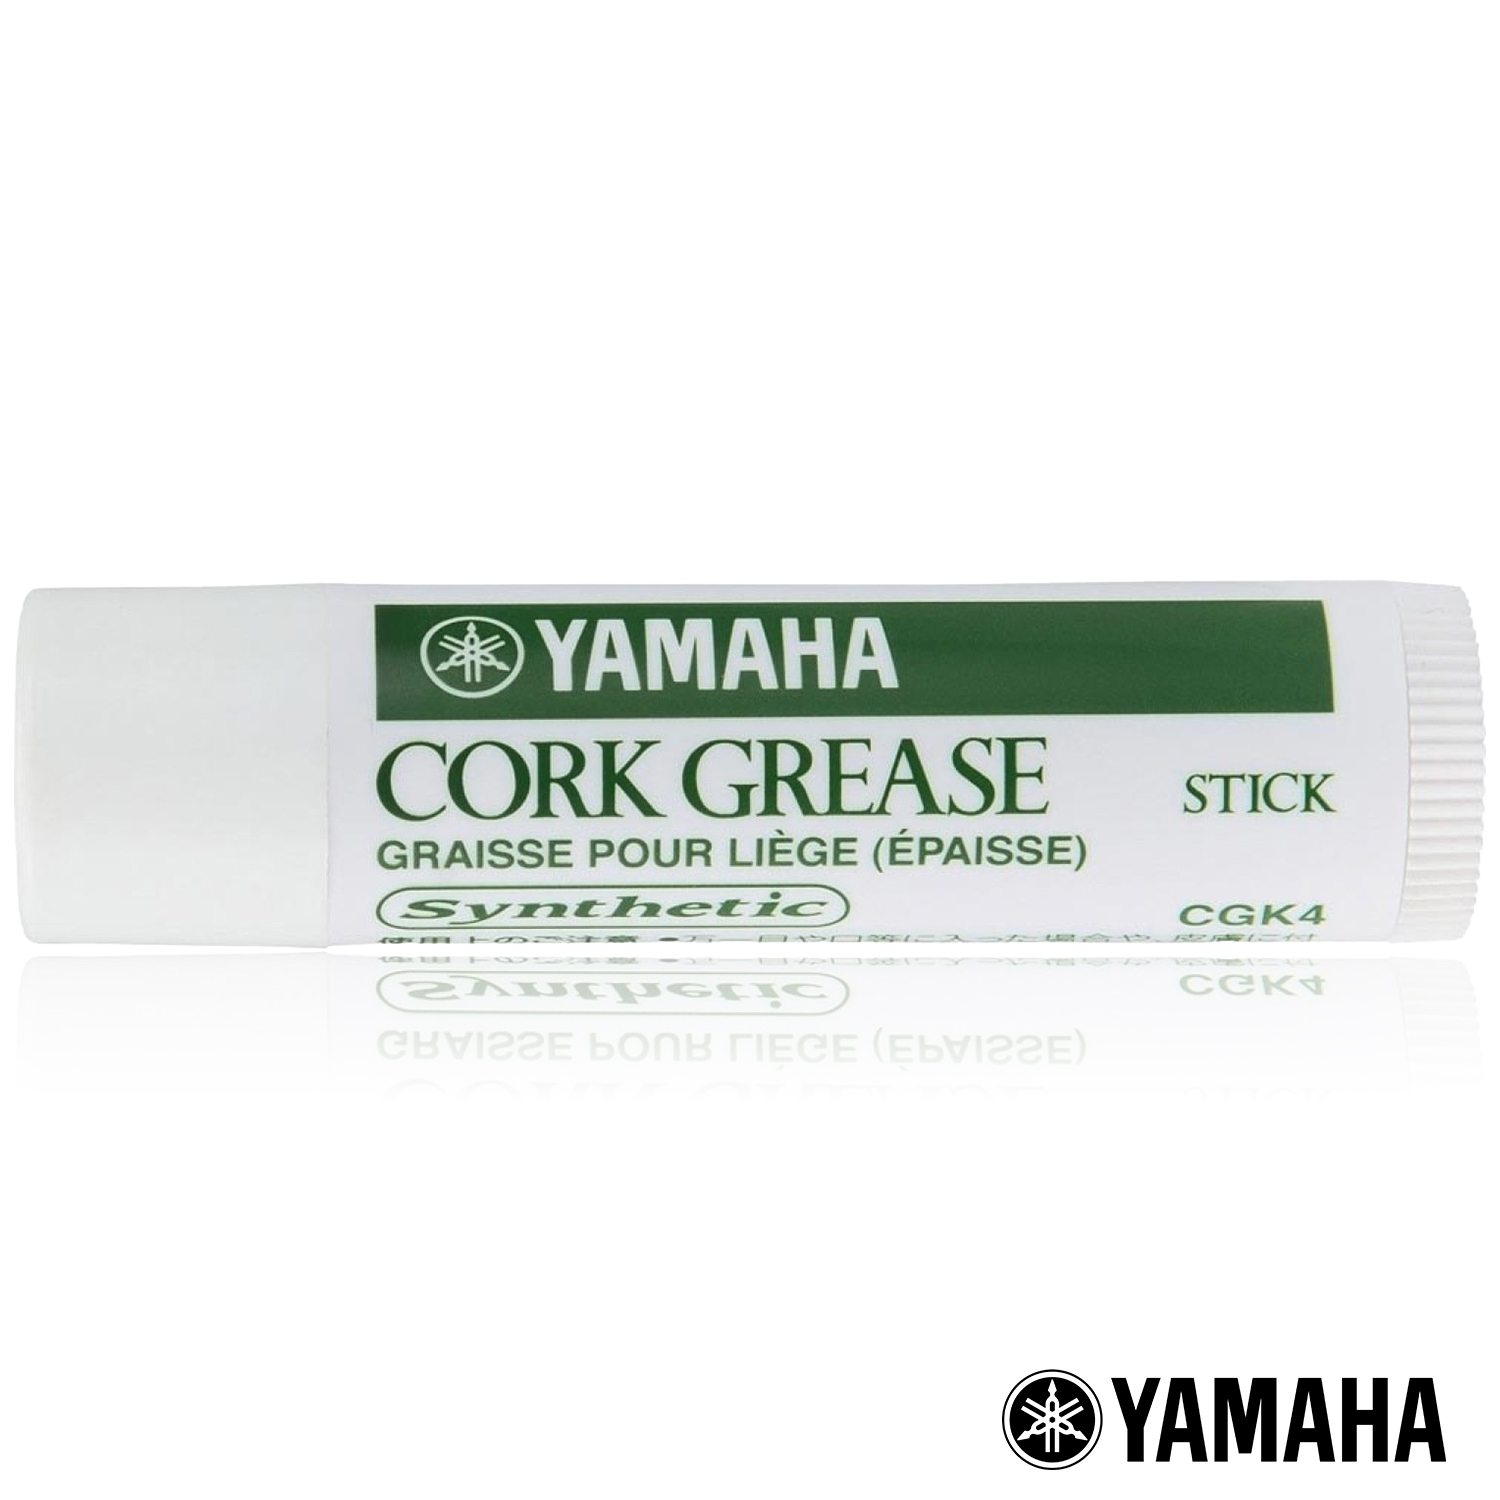 Yamaha Cork Grease 81990 ครีมทาก๊อก สำหรับเครื่องเป่า ครีมทาปากเป่าแซก ครีมทาปากเป่าคลาริเน็ต (Cork Grease)